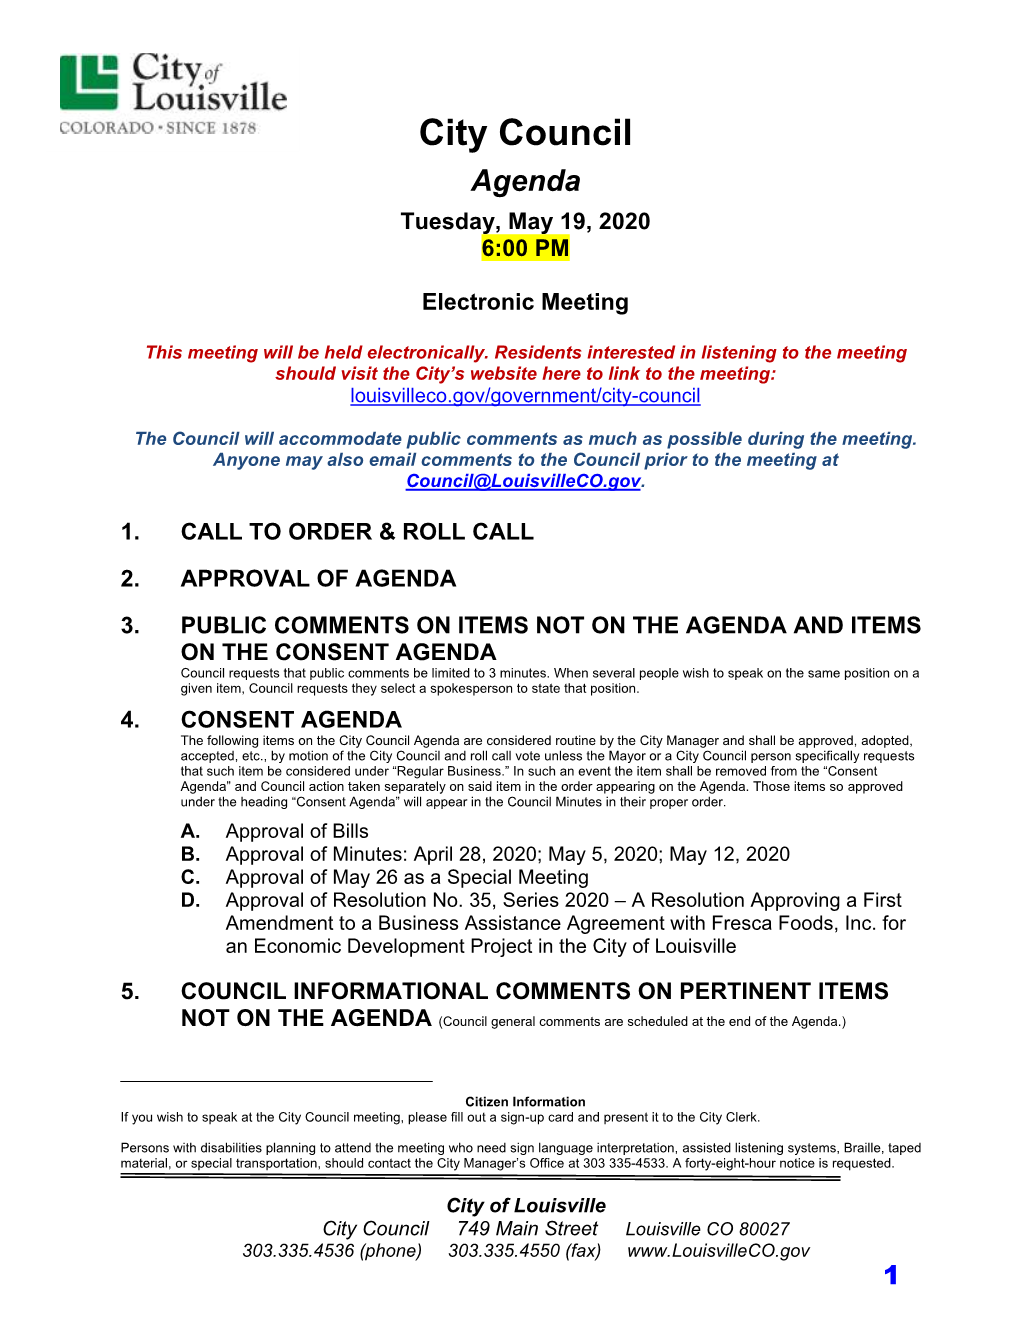 City Council Agenda Tuesday, May 19, 2020 6:00 PM